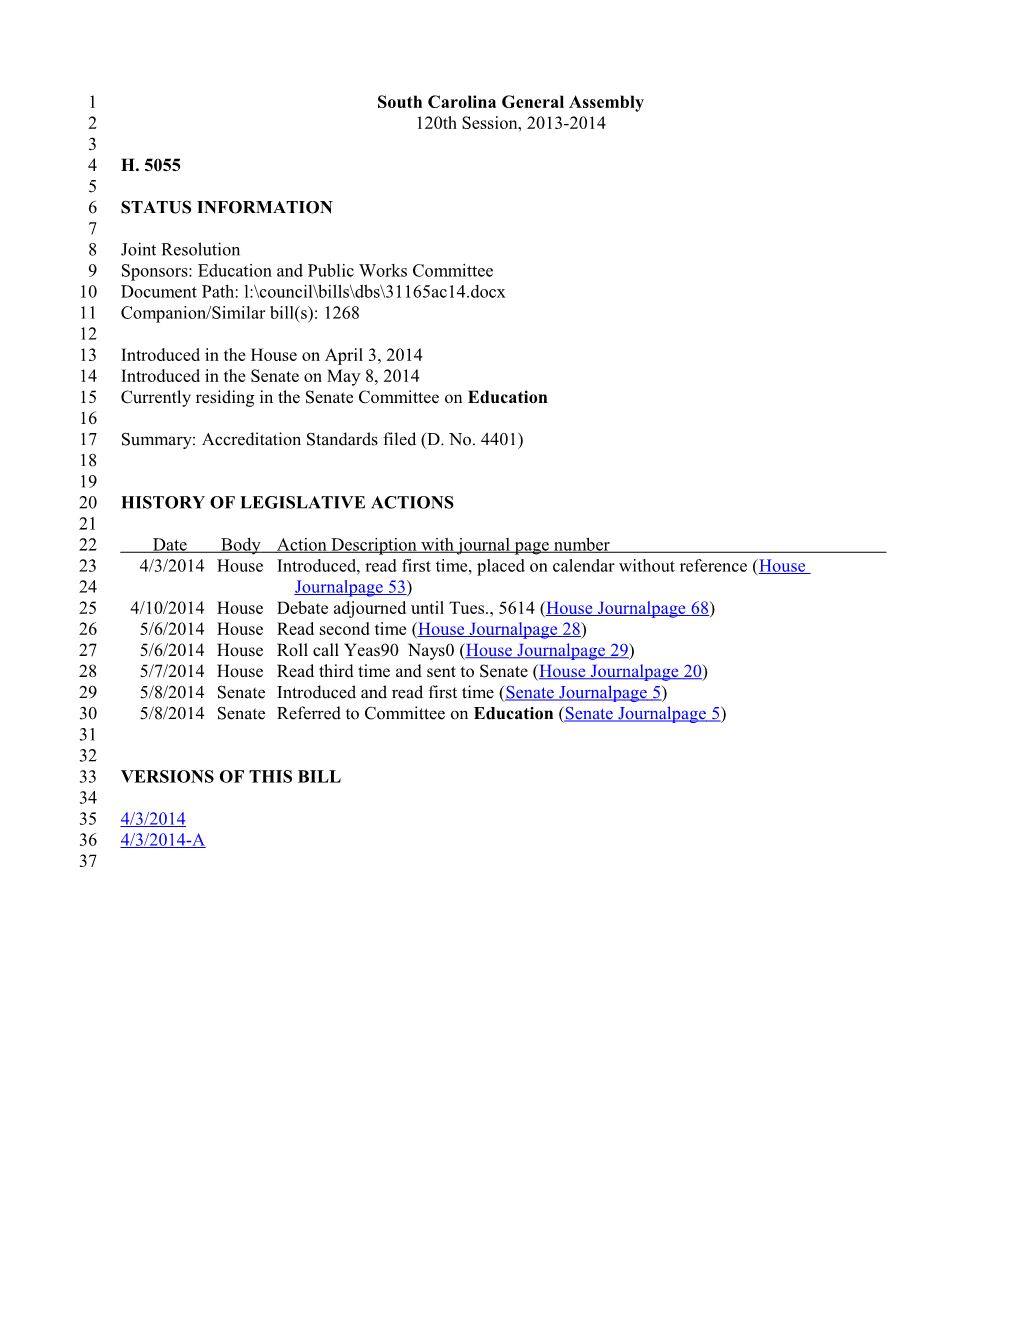 2013-2014 Bill 5055: Accreditation Standards Filed (D. No. 4401) - South Carolina Legislature